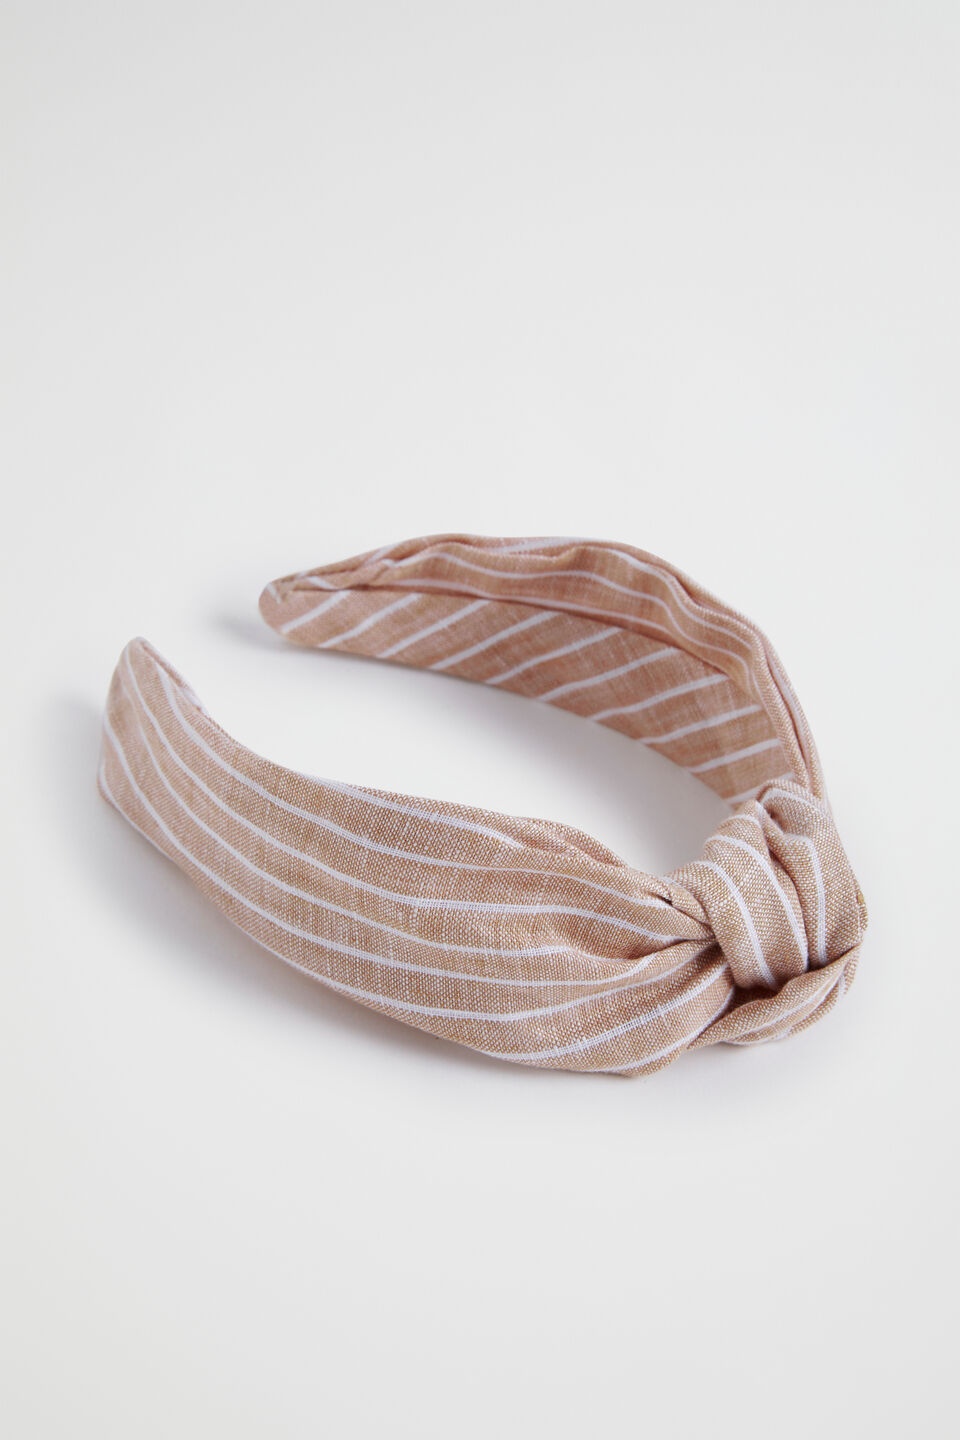 Linen Knot Headband  Barley Stripe